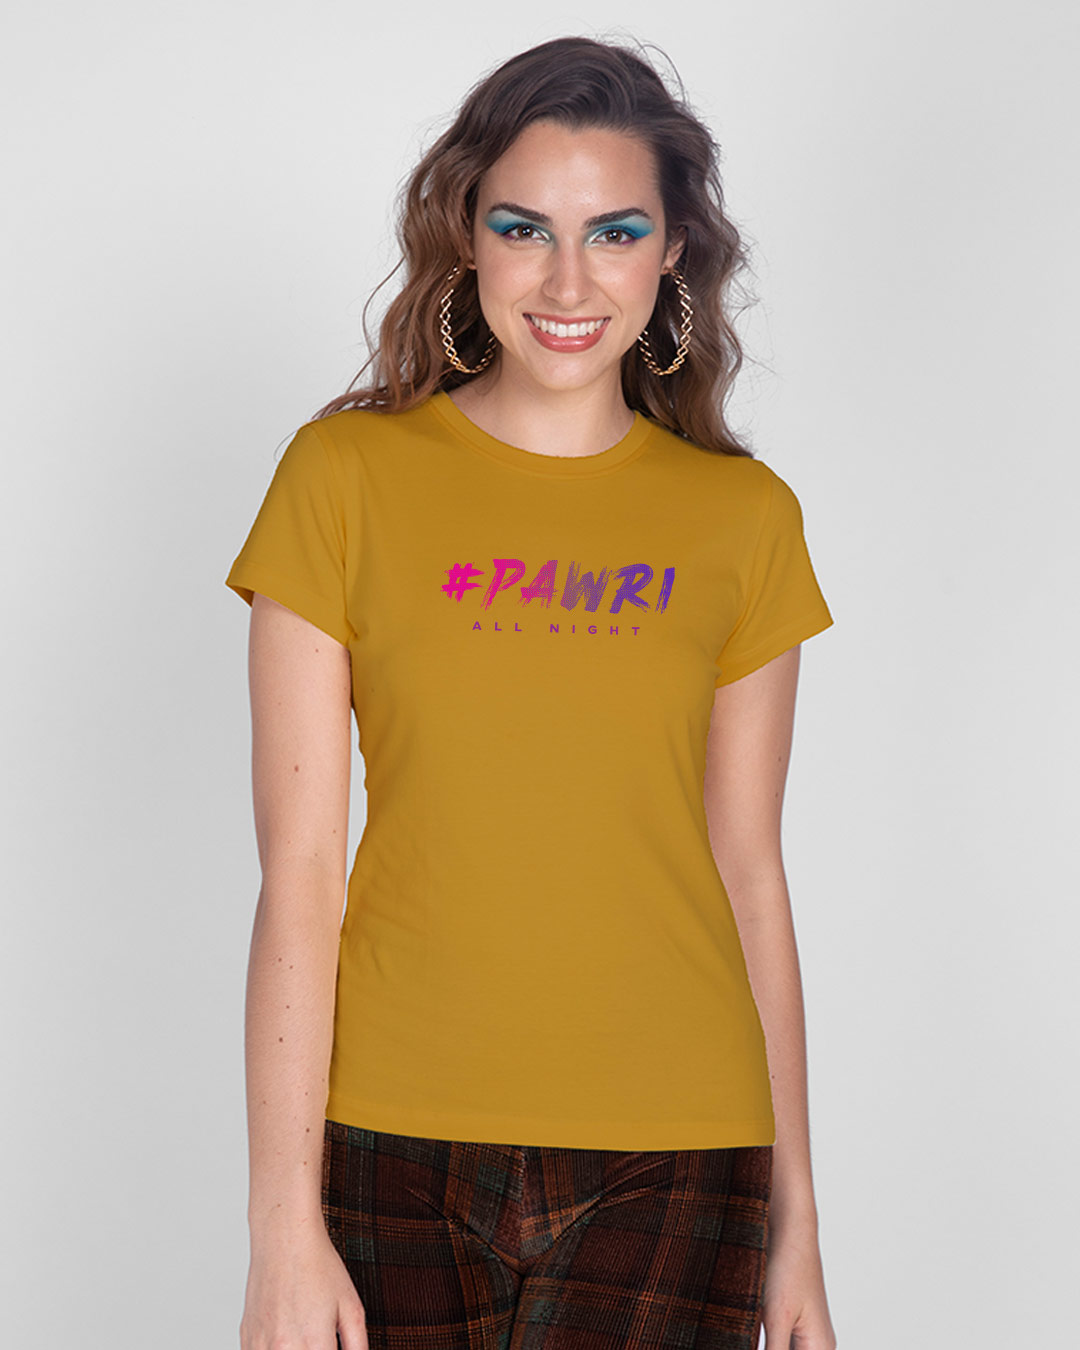 Shop Pawri All Night Half Sleeve Printed T-Shirt Mustard Yellow -Back